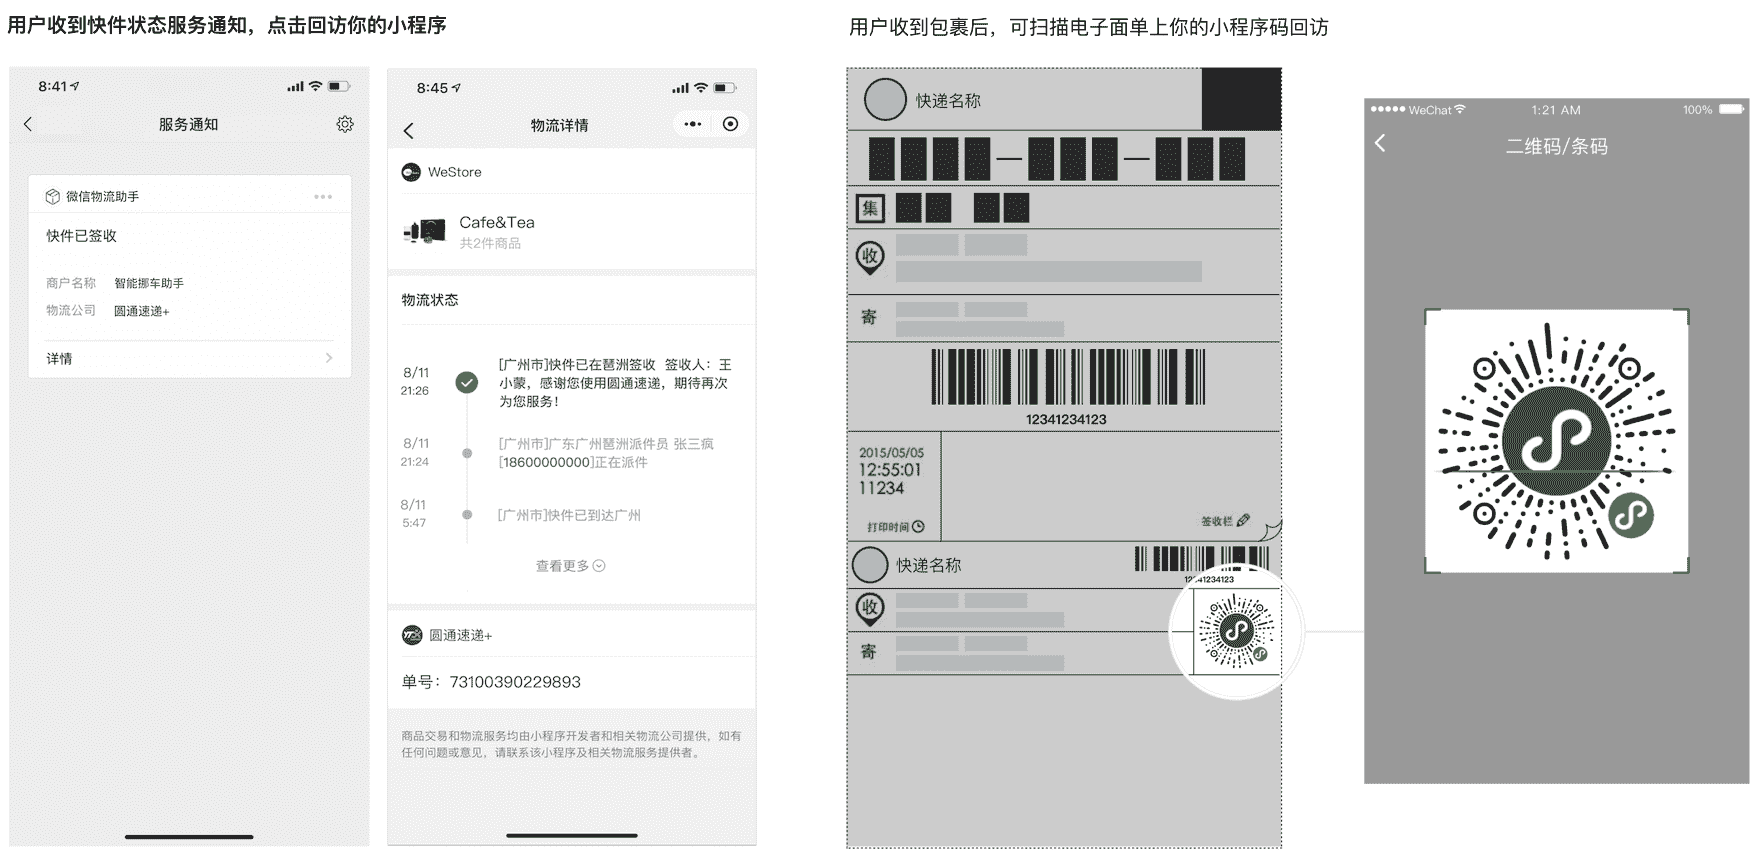 WeChat small program Express interface (merchant view) documentation